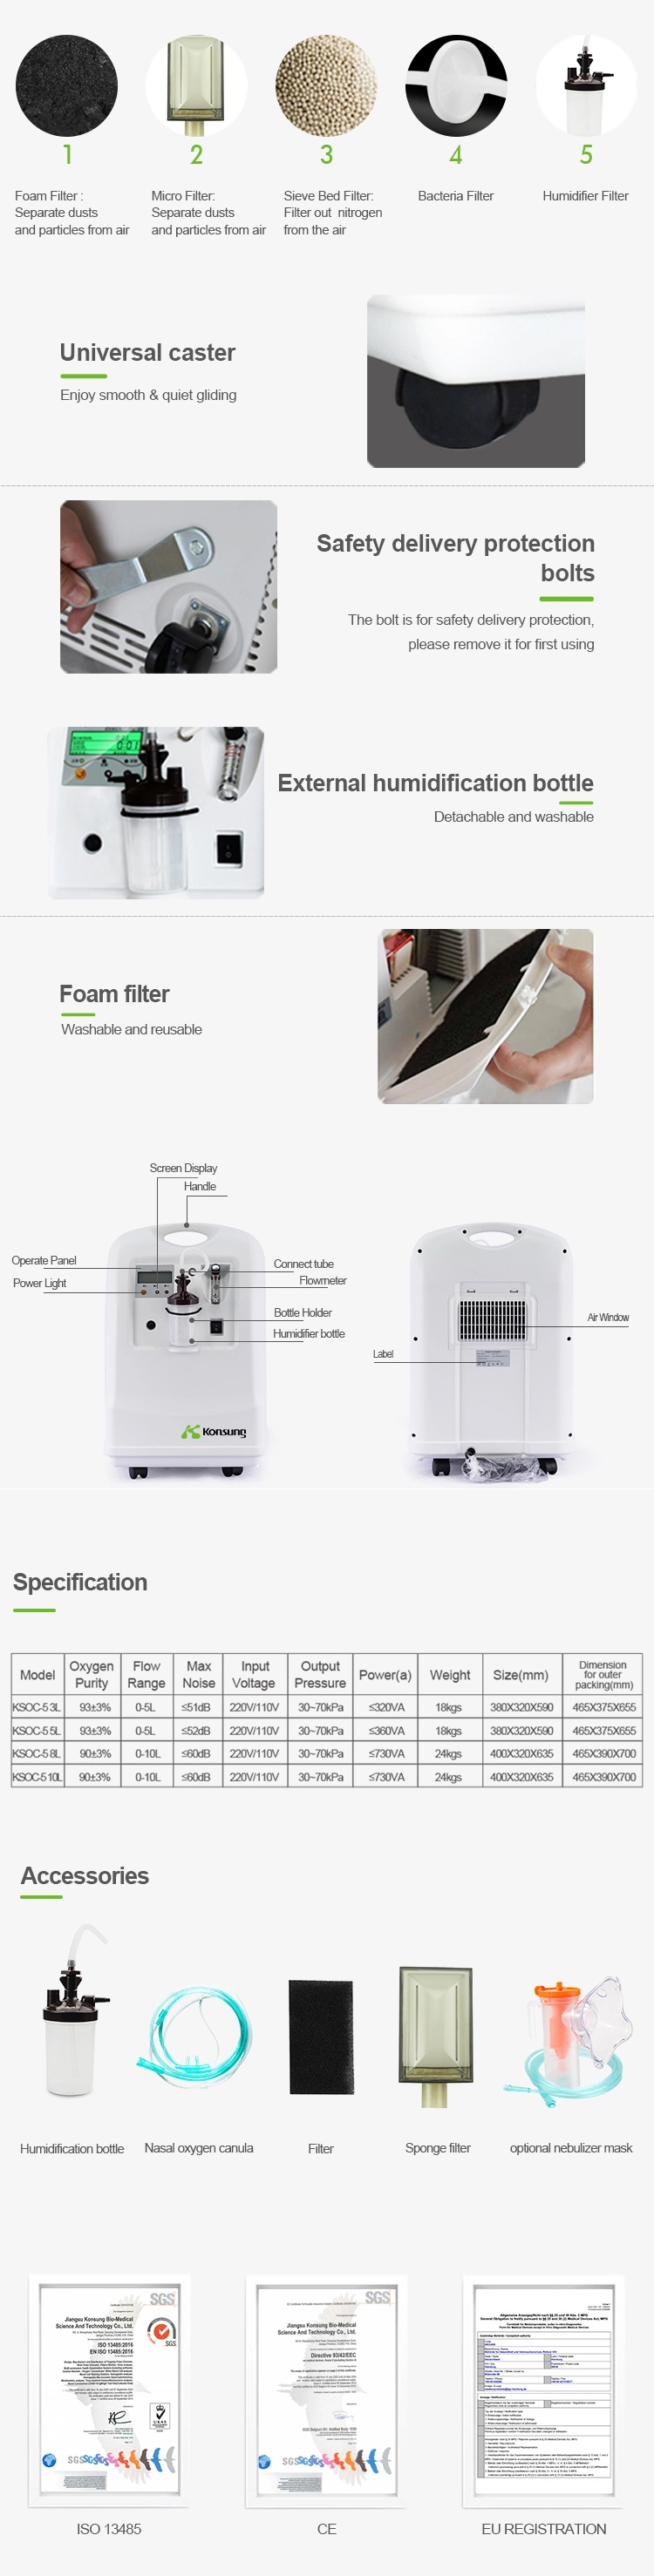 Ksoc-10 Superior Oxygen Supply Concentrator, Medical Oxygen Supply Product, Safe Oxygen Supply Generator